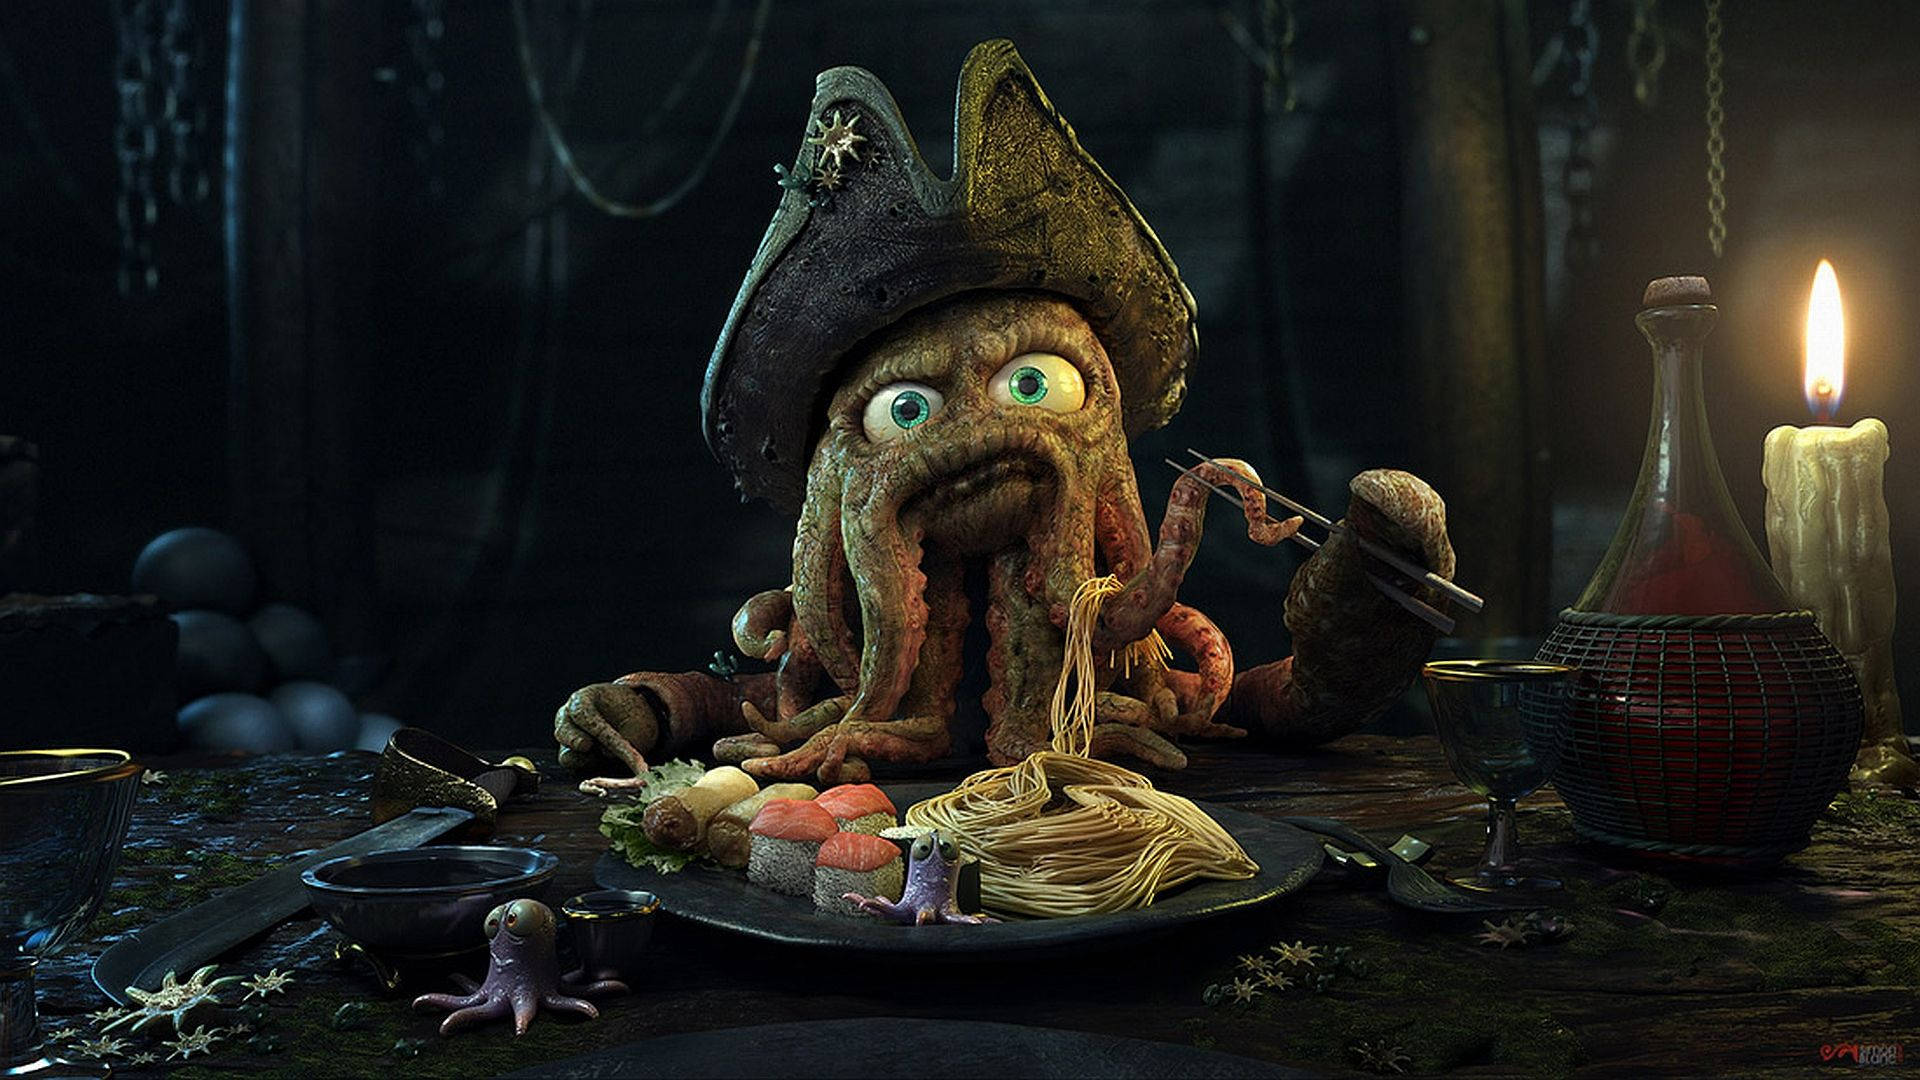 Pirate Octopus Eating Dinner